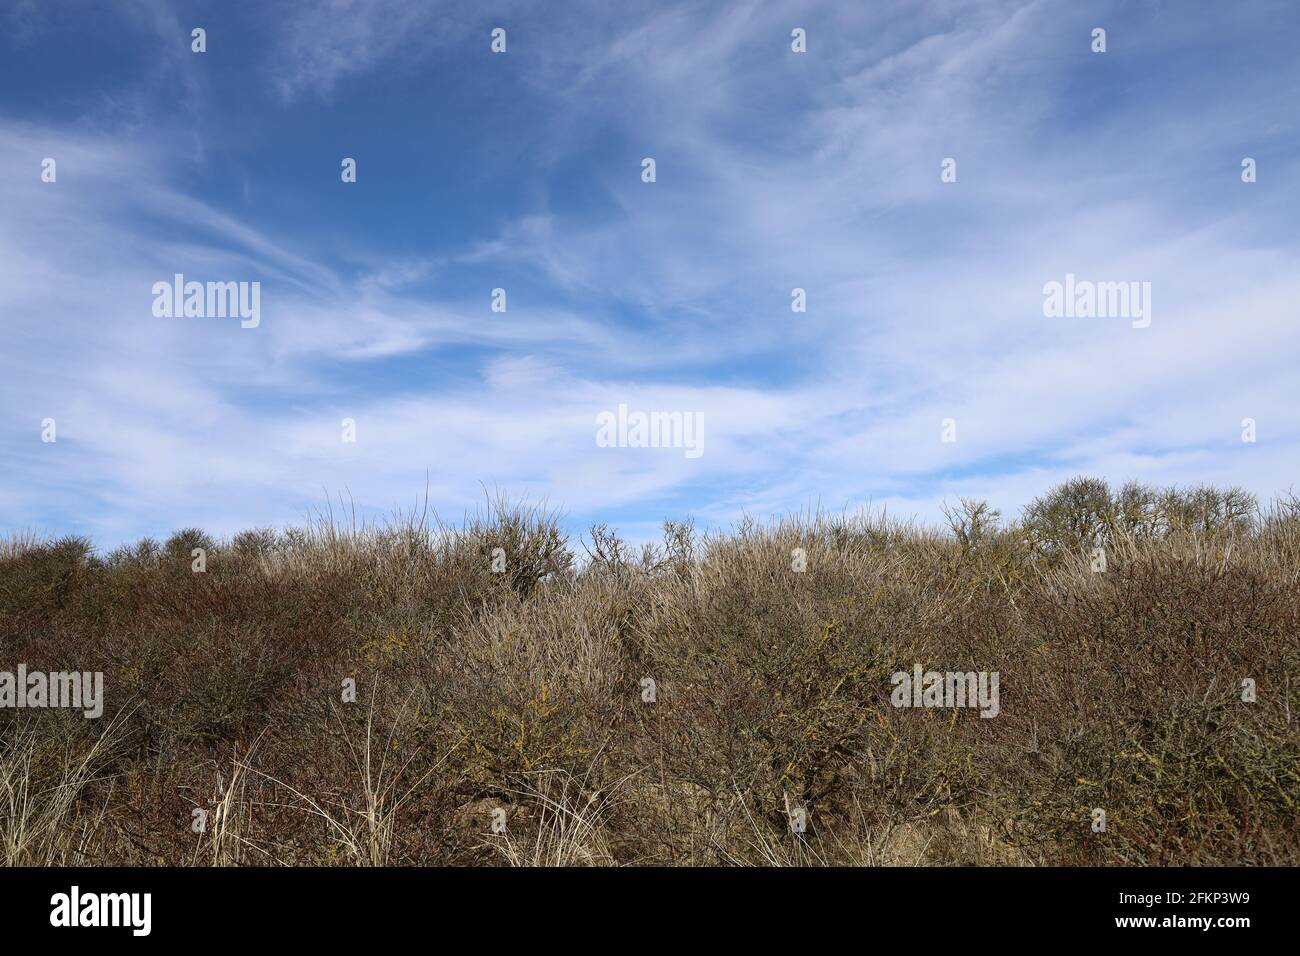 Beautiful view of a dry grassy field near Nr. Lyngby, Denmark Stock Photo